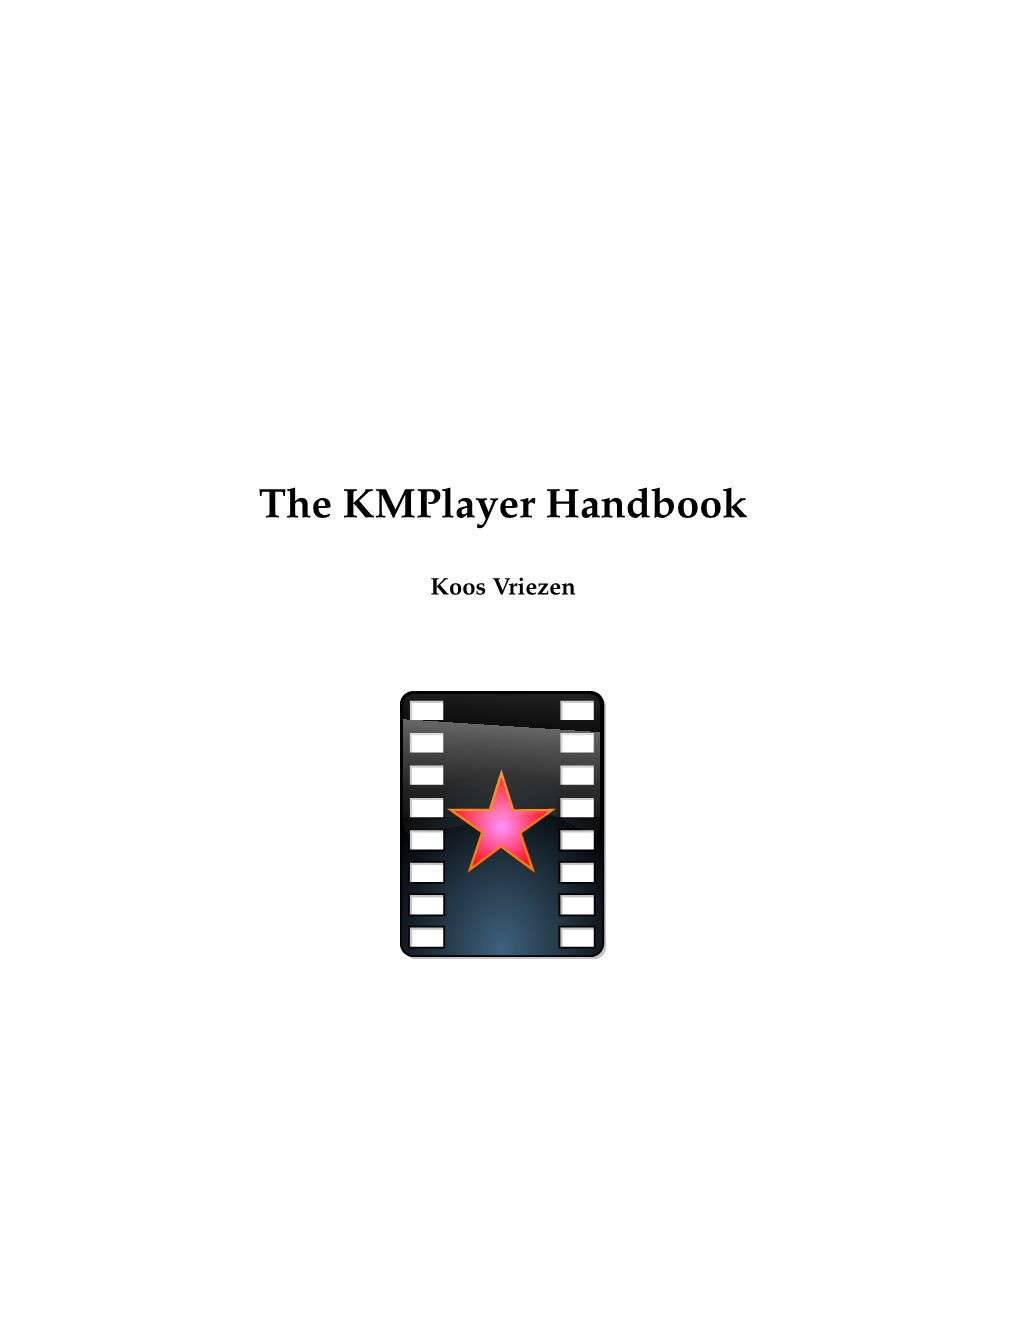 The Kmplayer Handbook